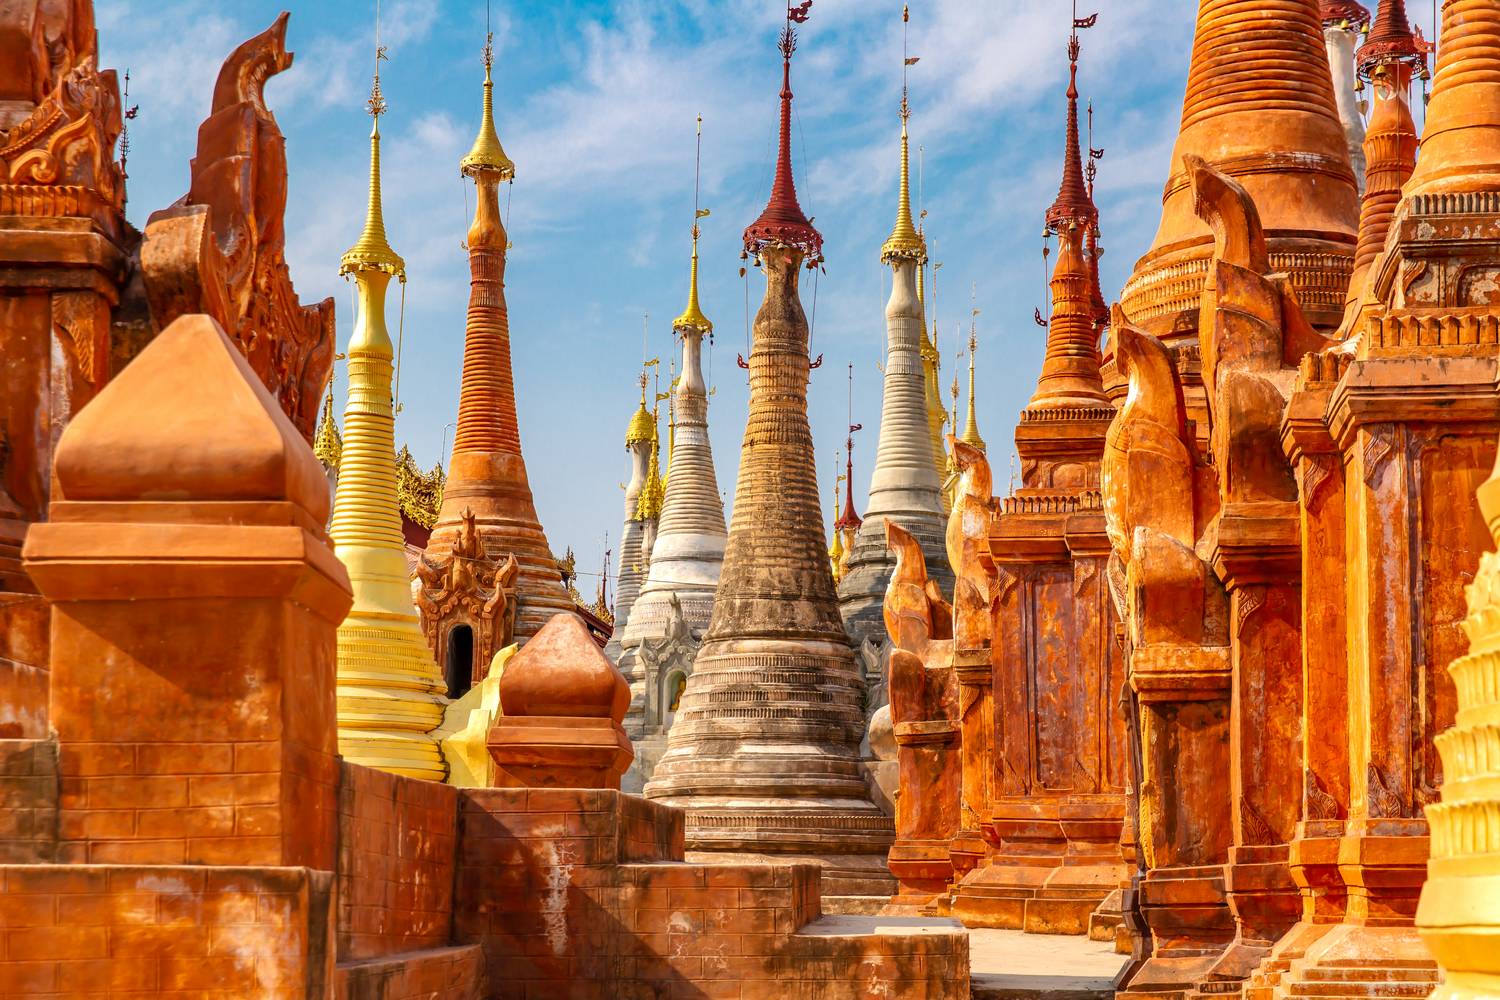 Tempel und Pagoden am Inle See in Myanmar (Burma) von Miro May